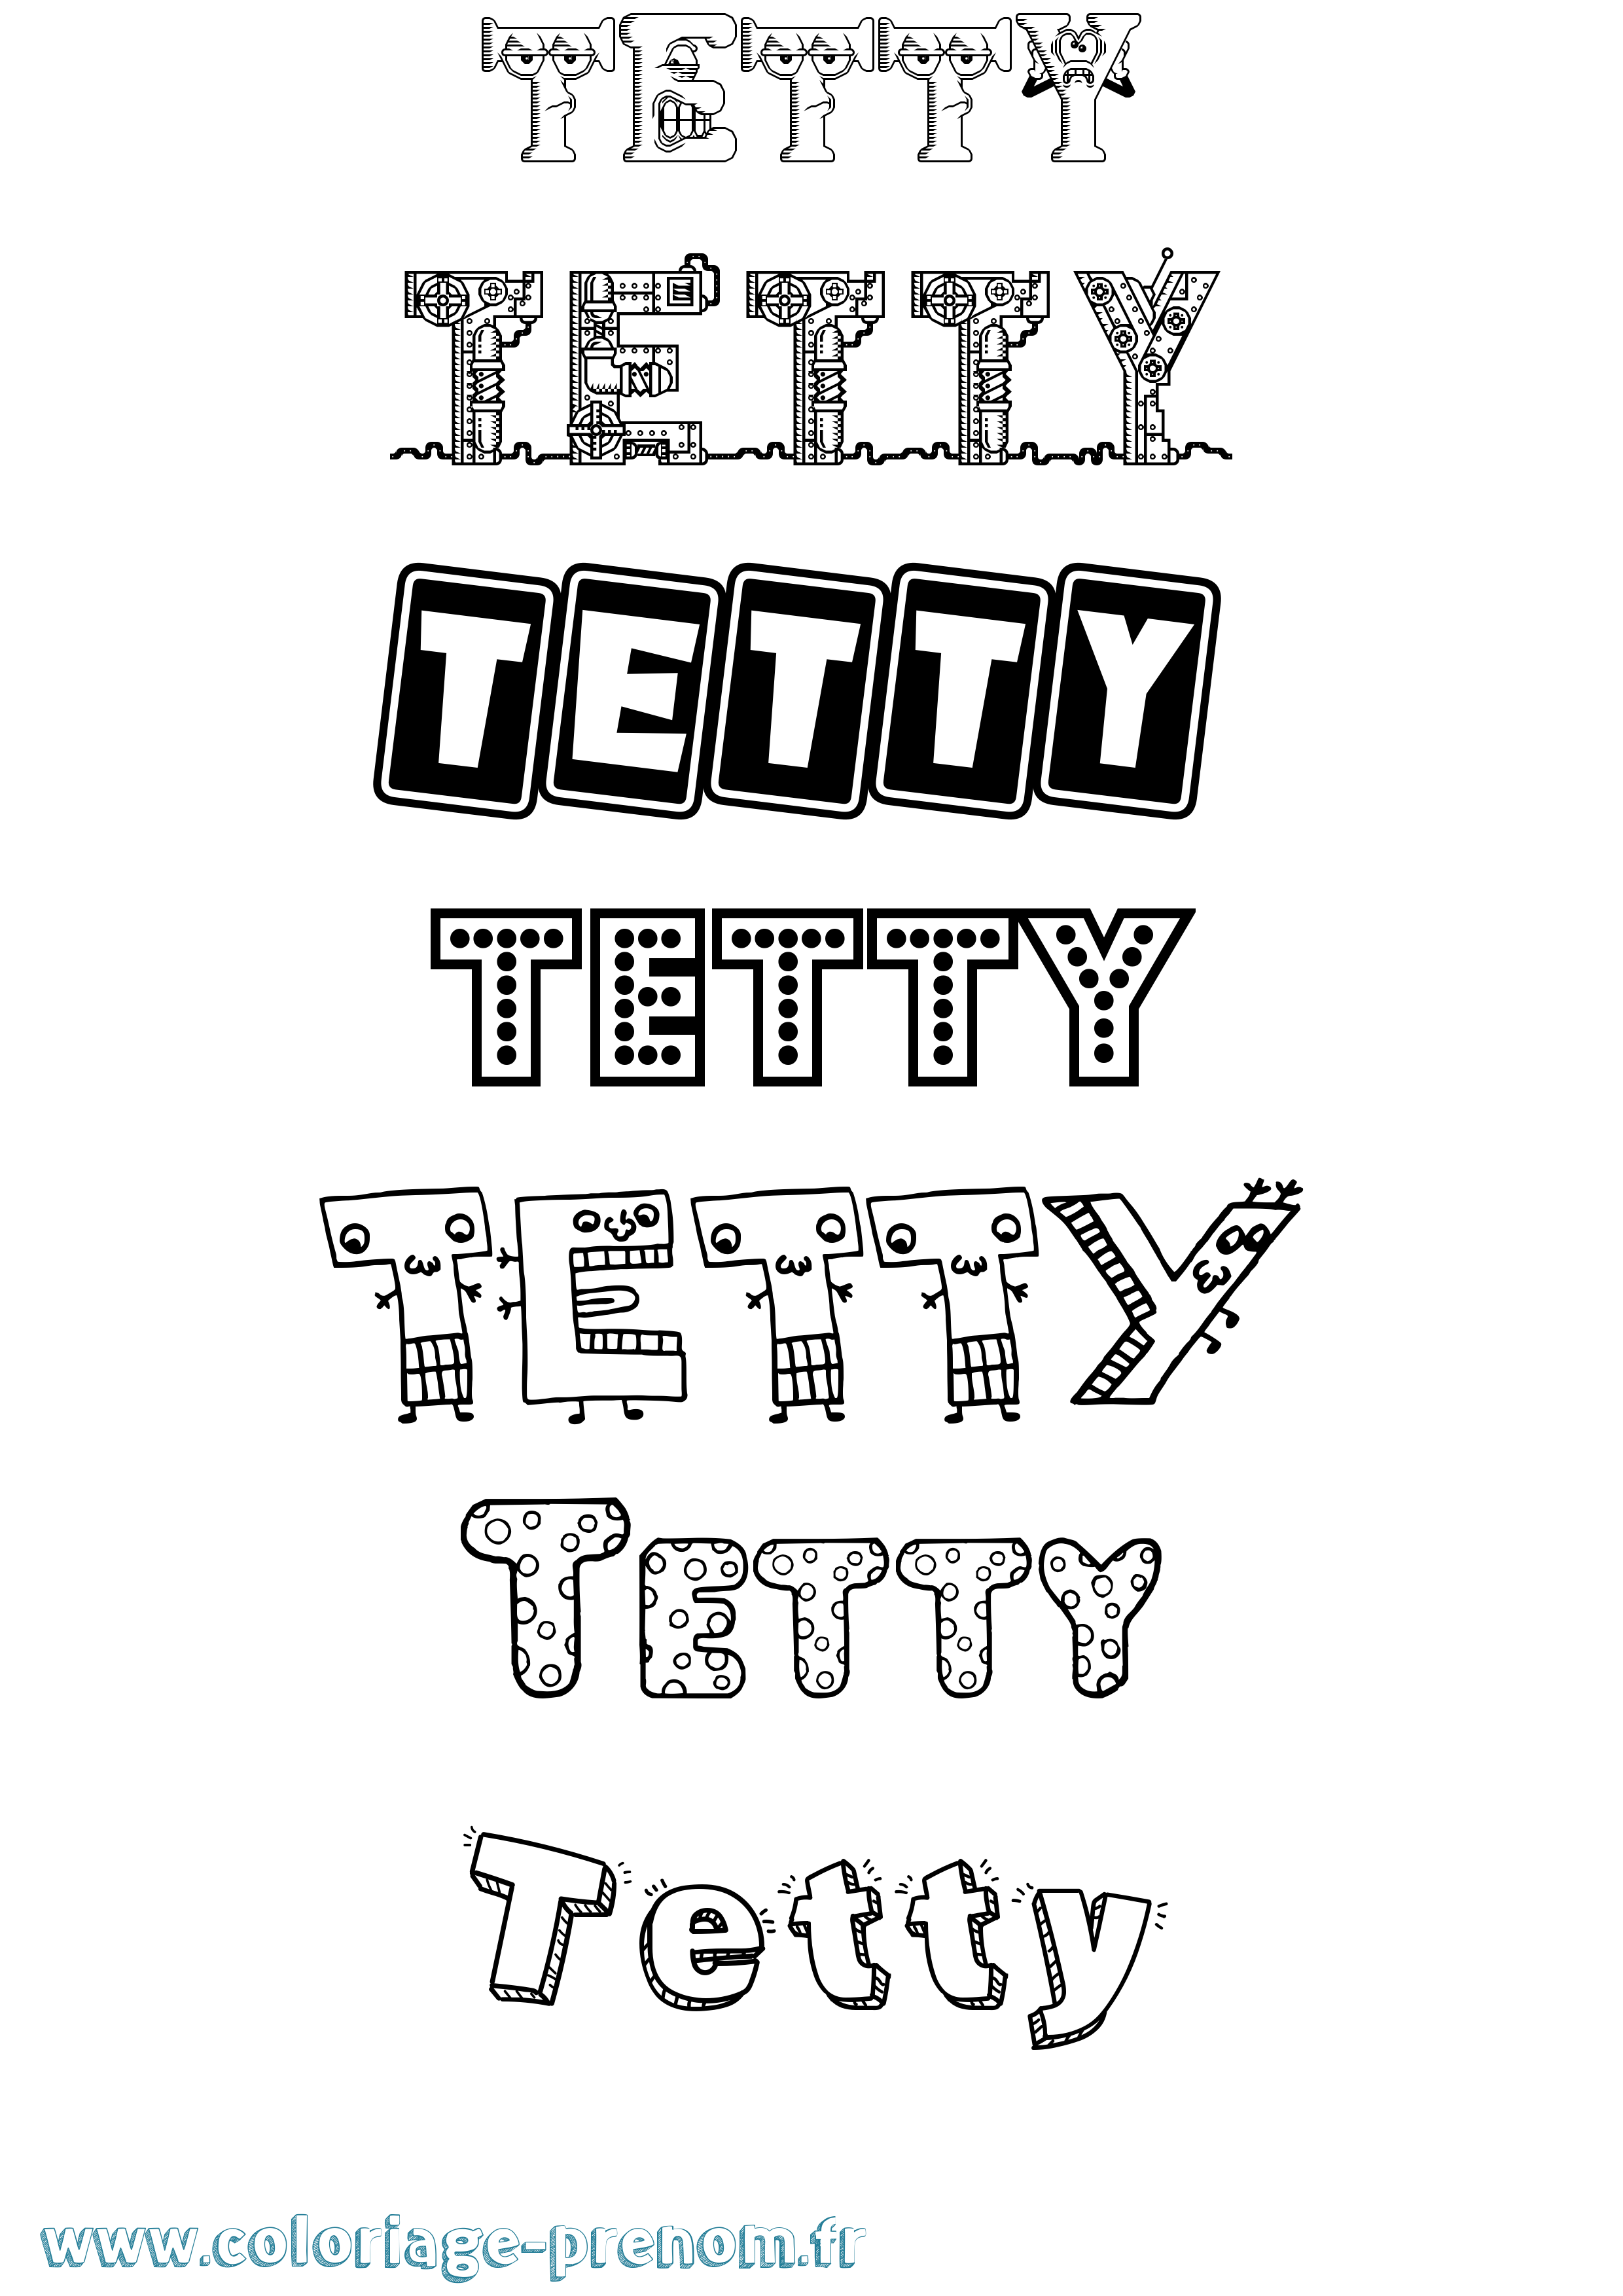 Coloriage prénom Tetty Fun